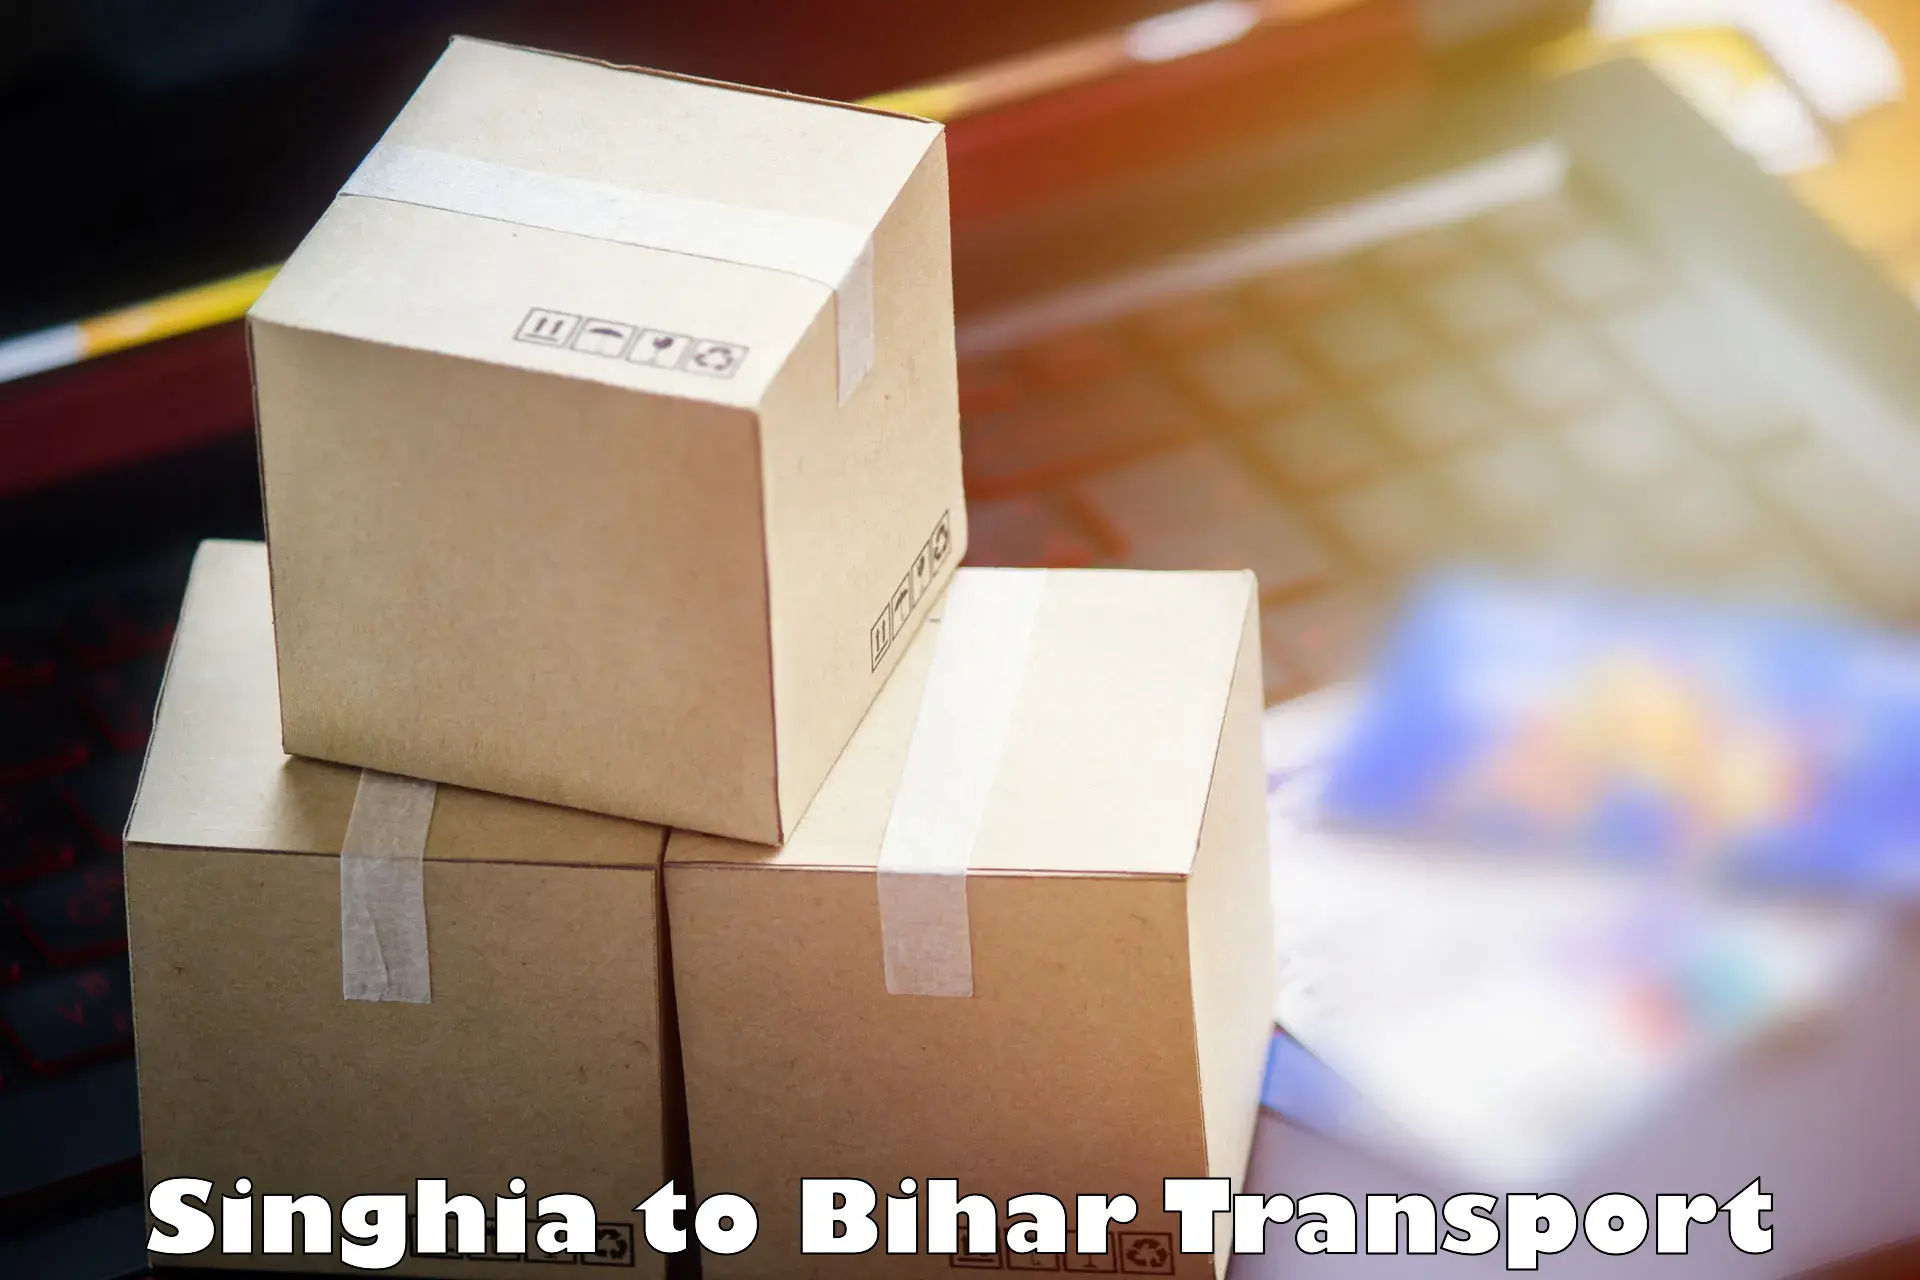 Pick up transport service Singhia to Gaya